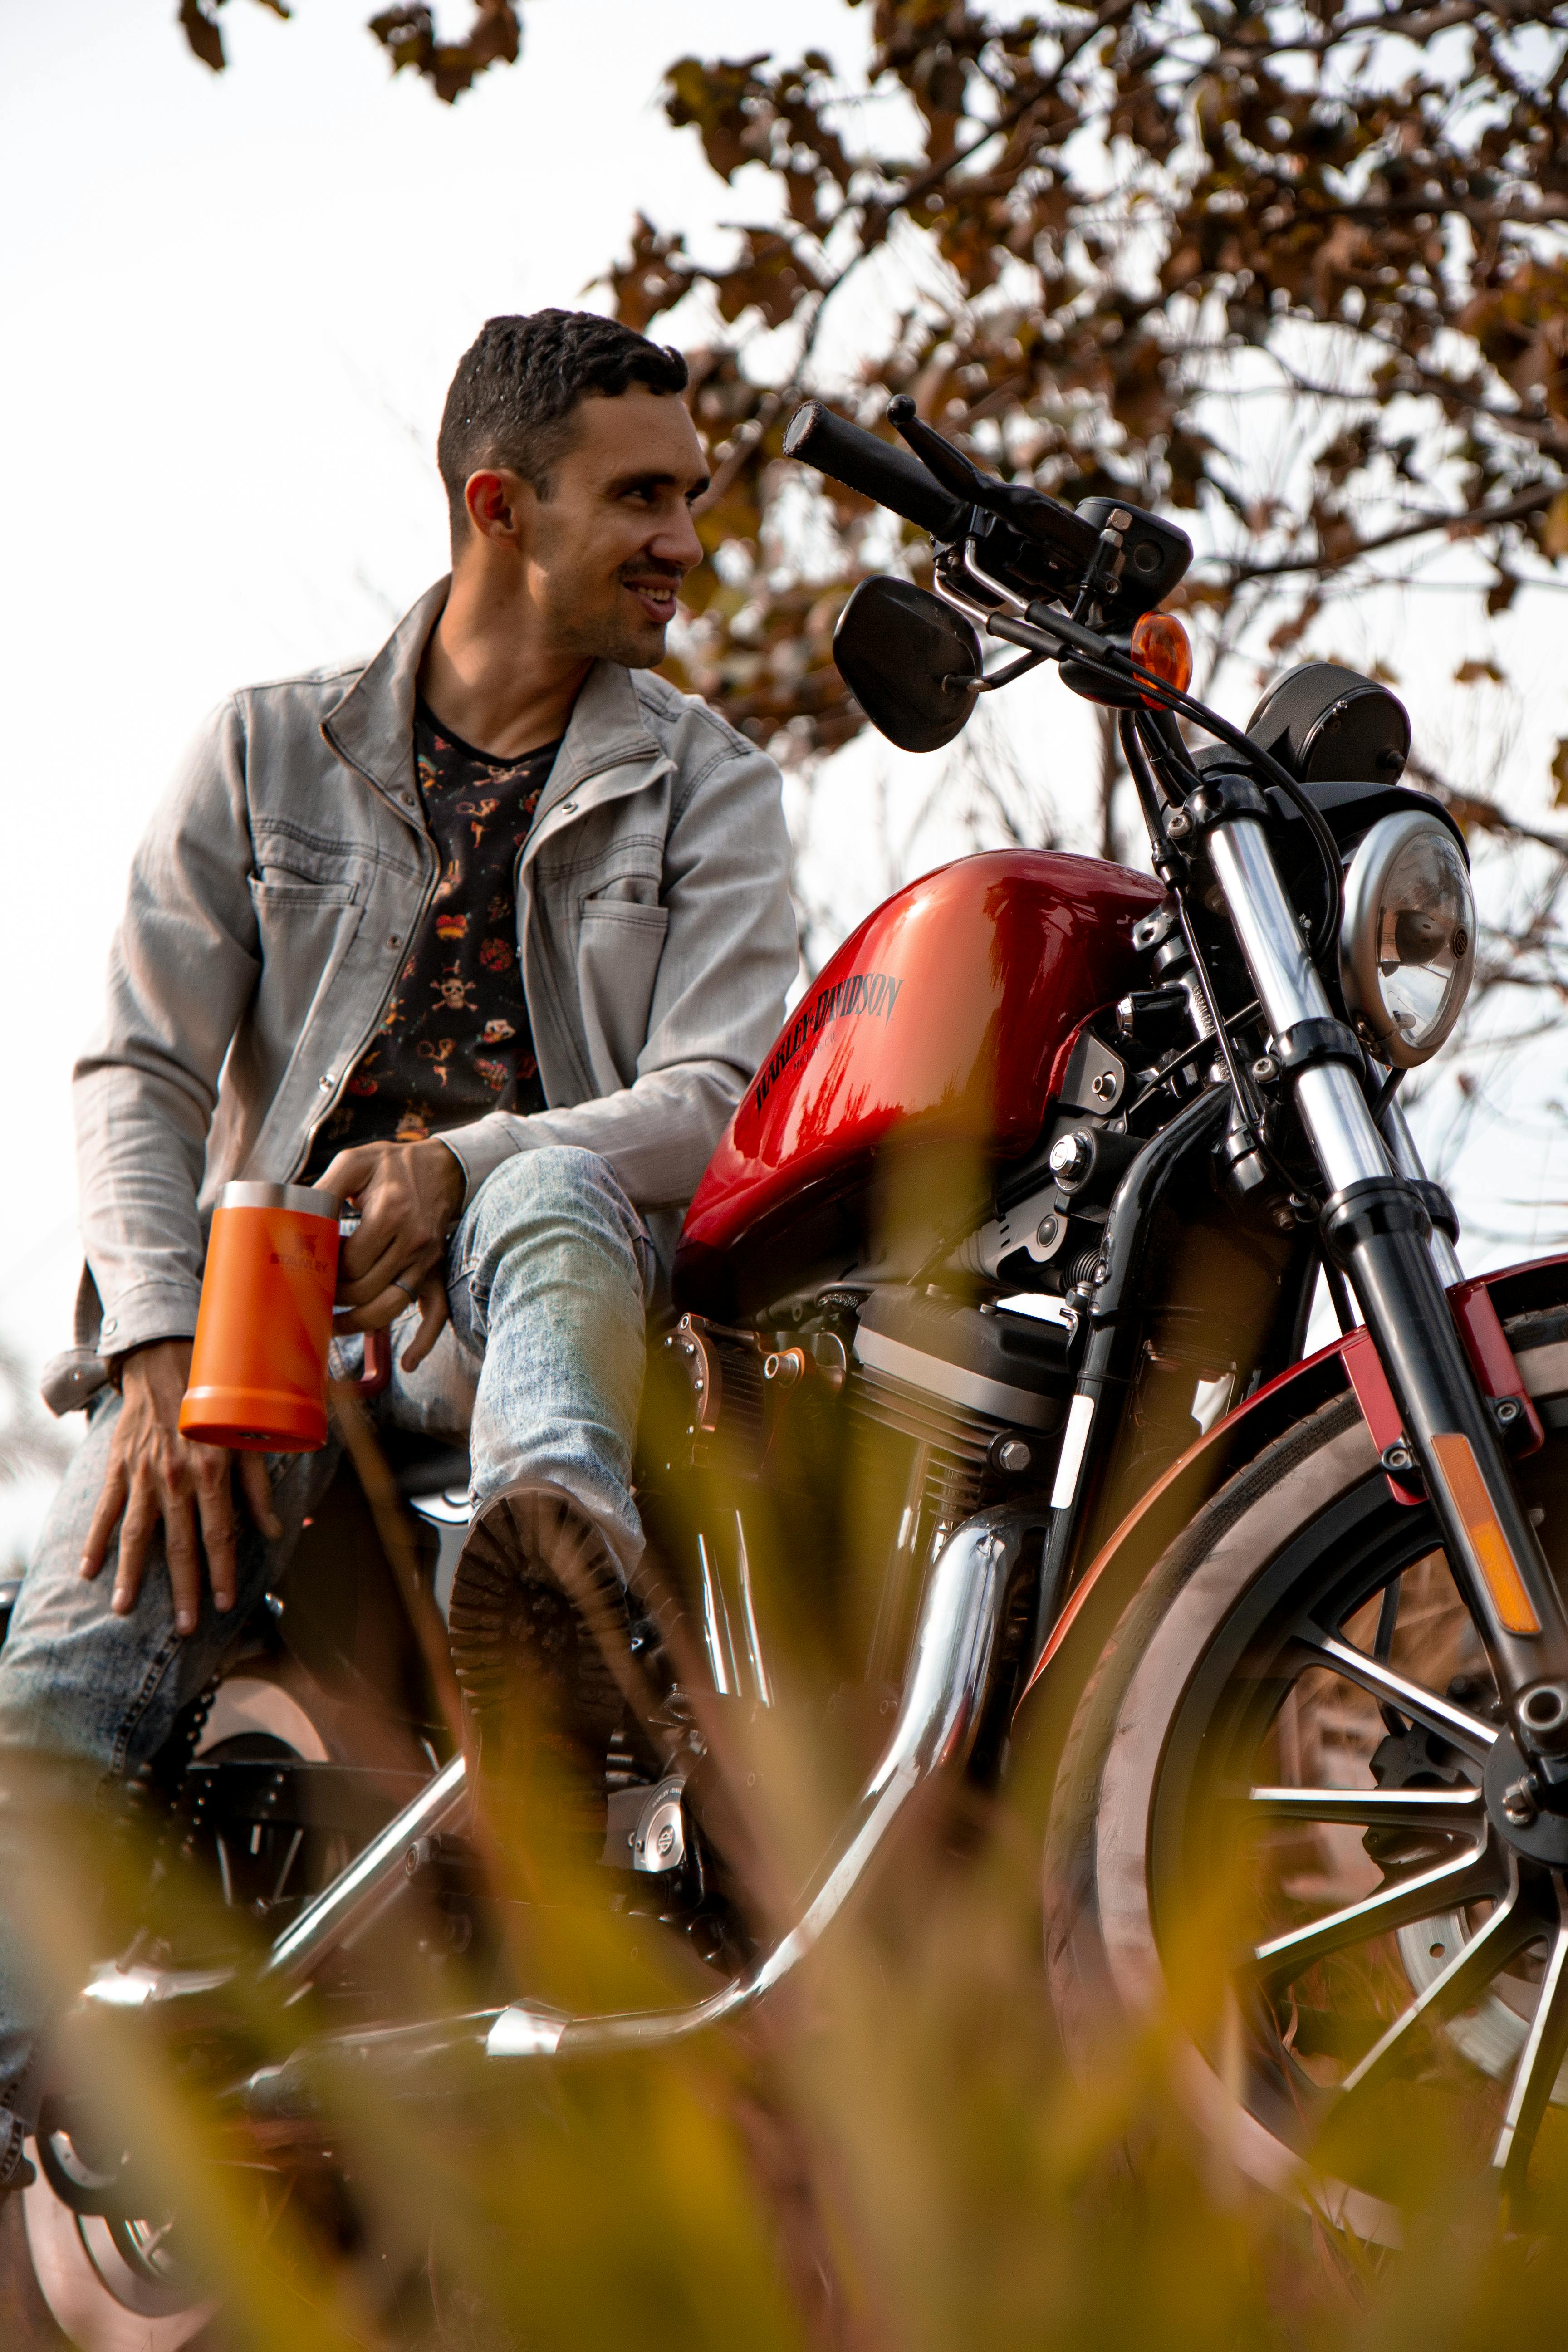 A man sitting on a motorcycle photo – Free Nature portrait Image on Unsplash